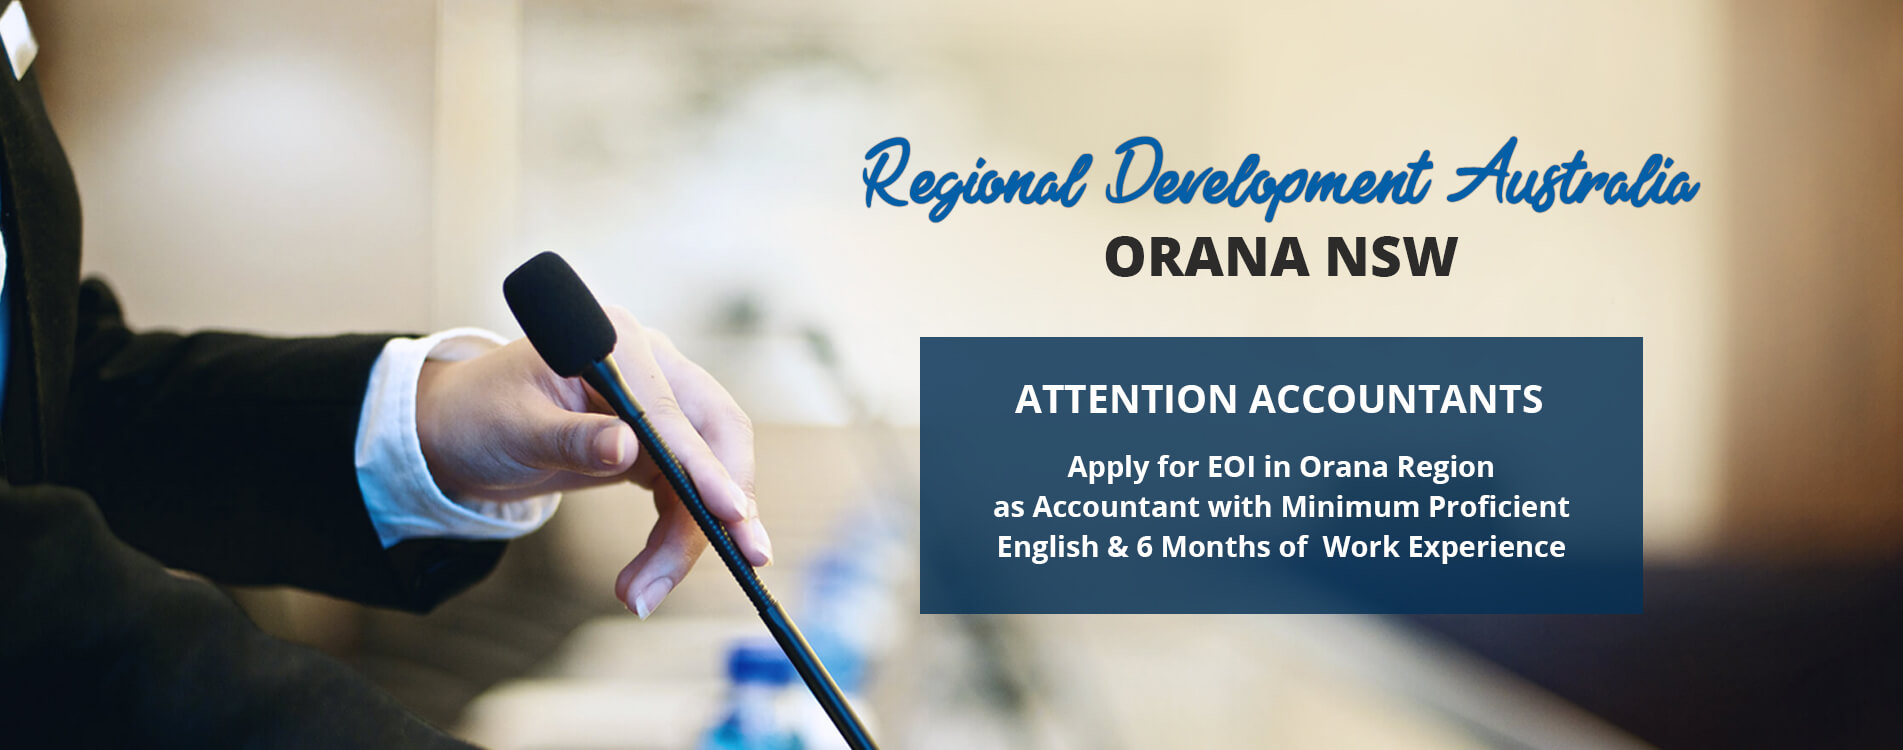 Orana NSW Region Opens EOI for Accountants